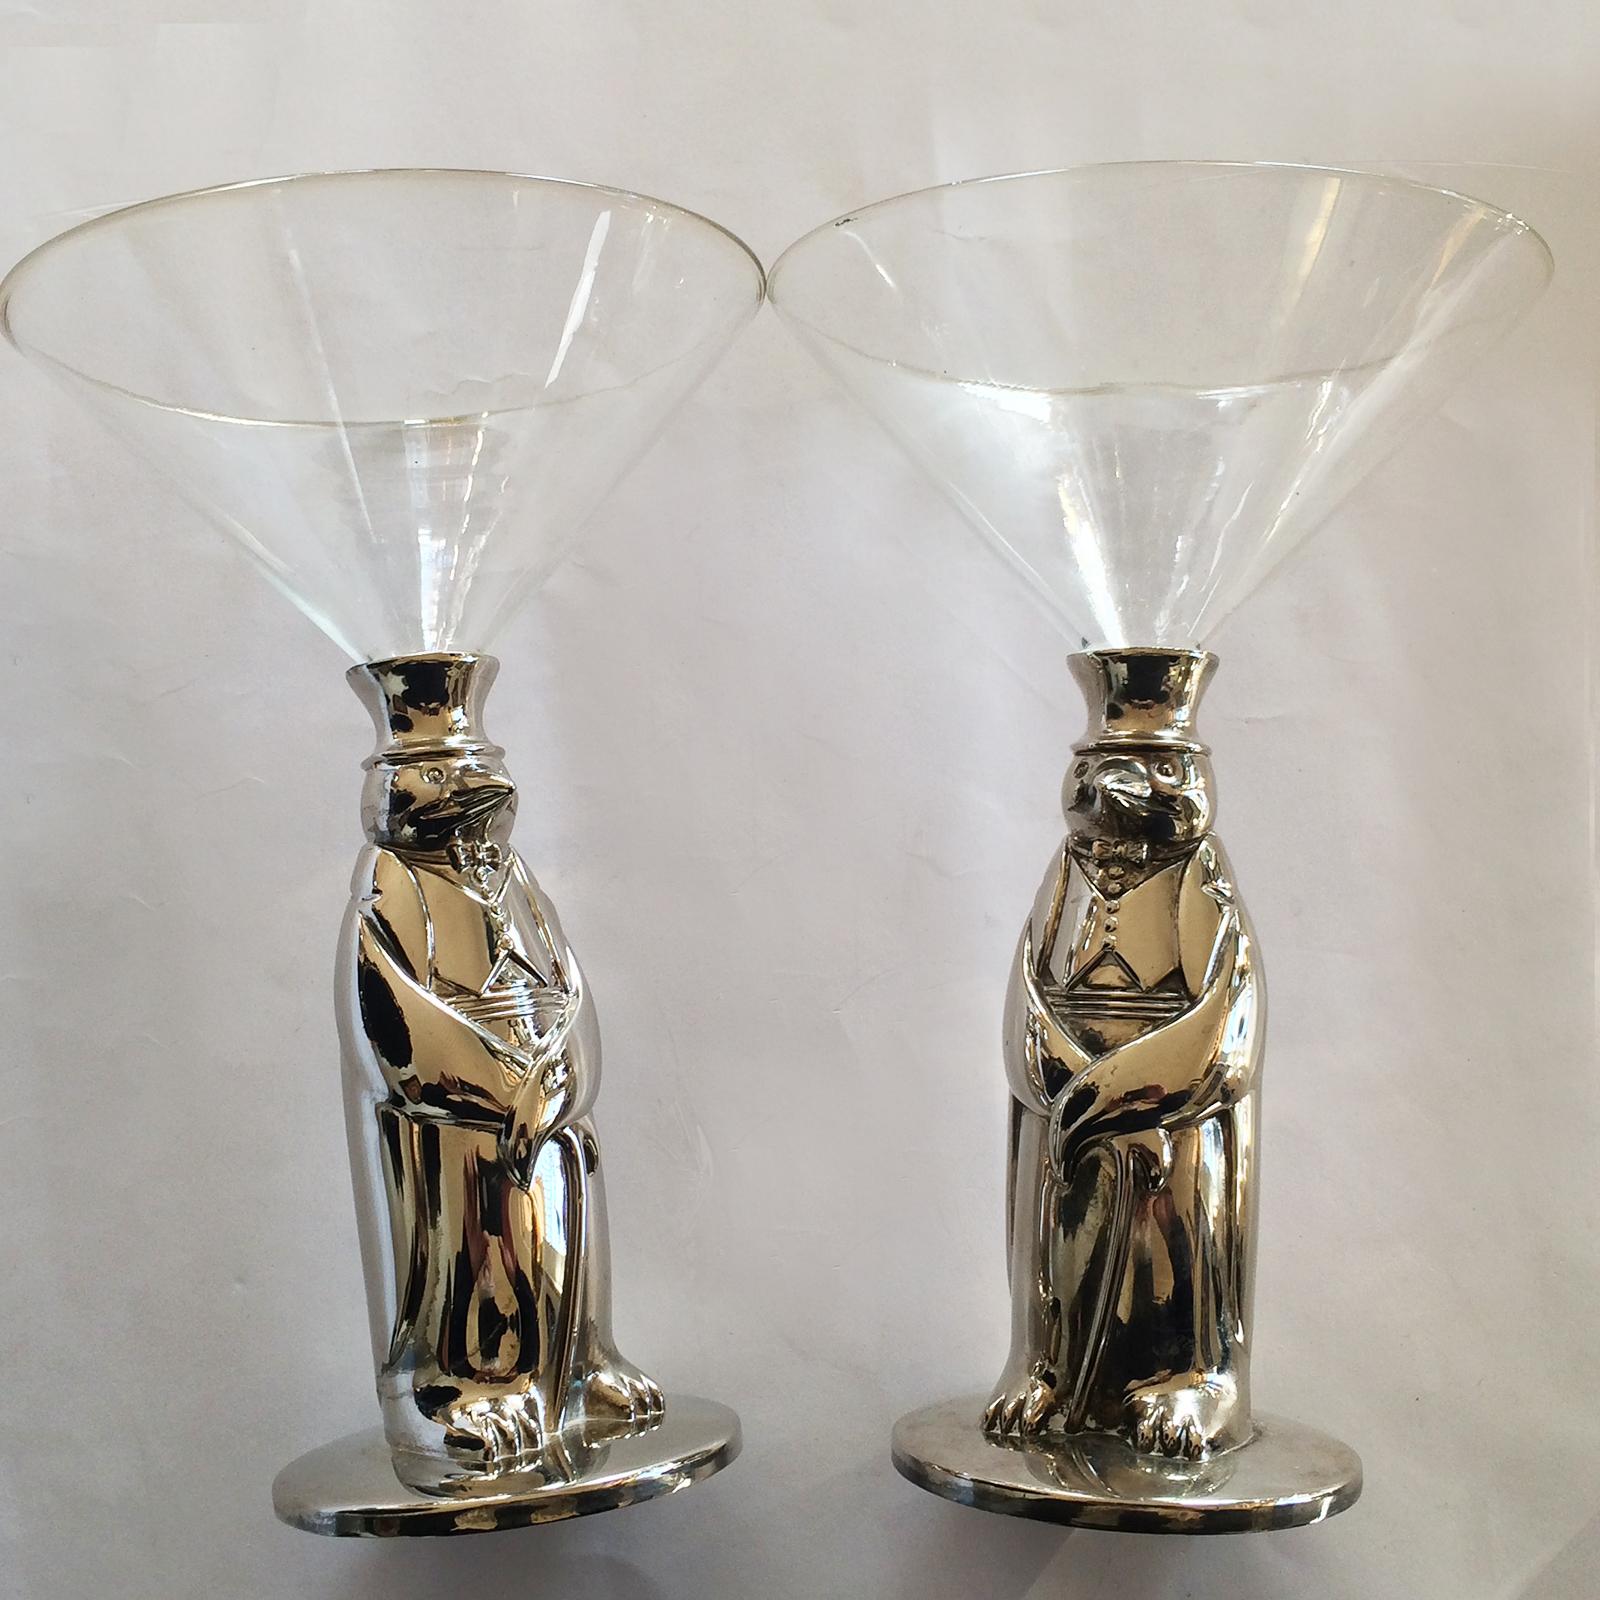 Art Deco Midcentury Cocktail Set, Penguin Shaker and Two Penguin Glasses